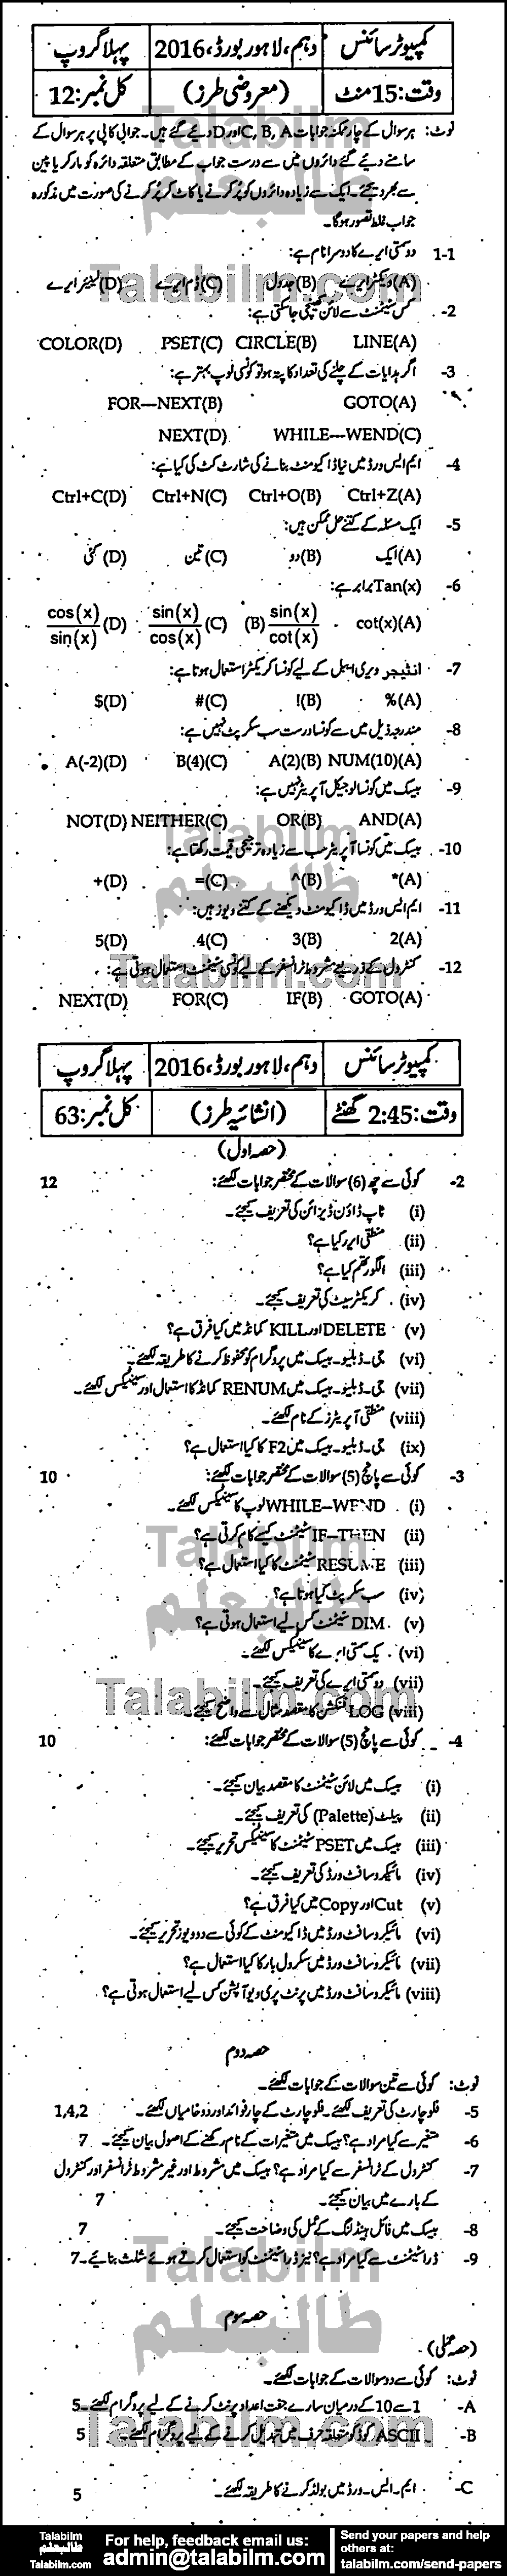 Computer Science 0 past paper for Urdu Medium 2016 Group-I